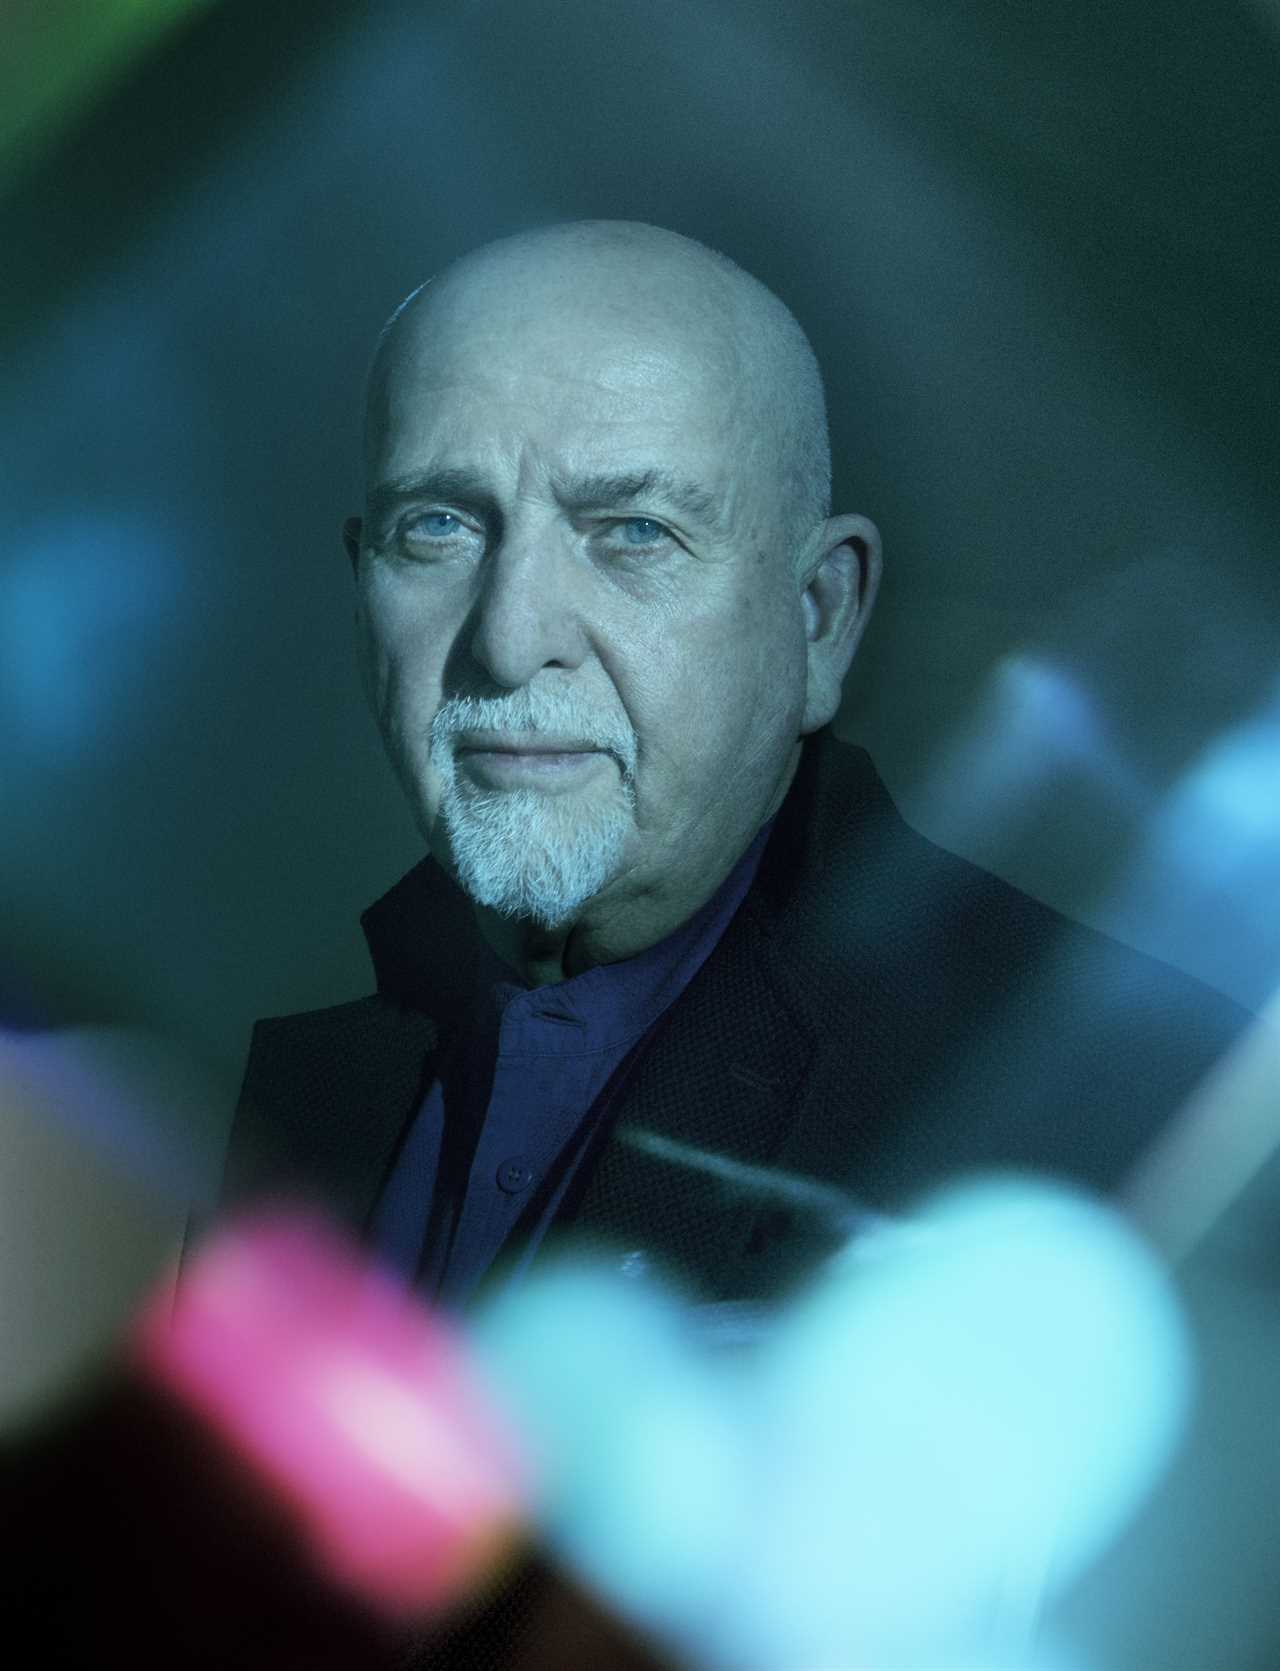 Genesis rocker Peter Gabriel embraces mortality with new album release